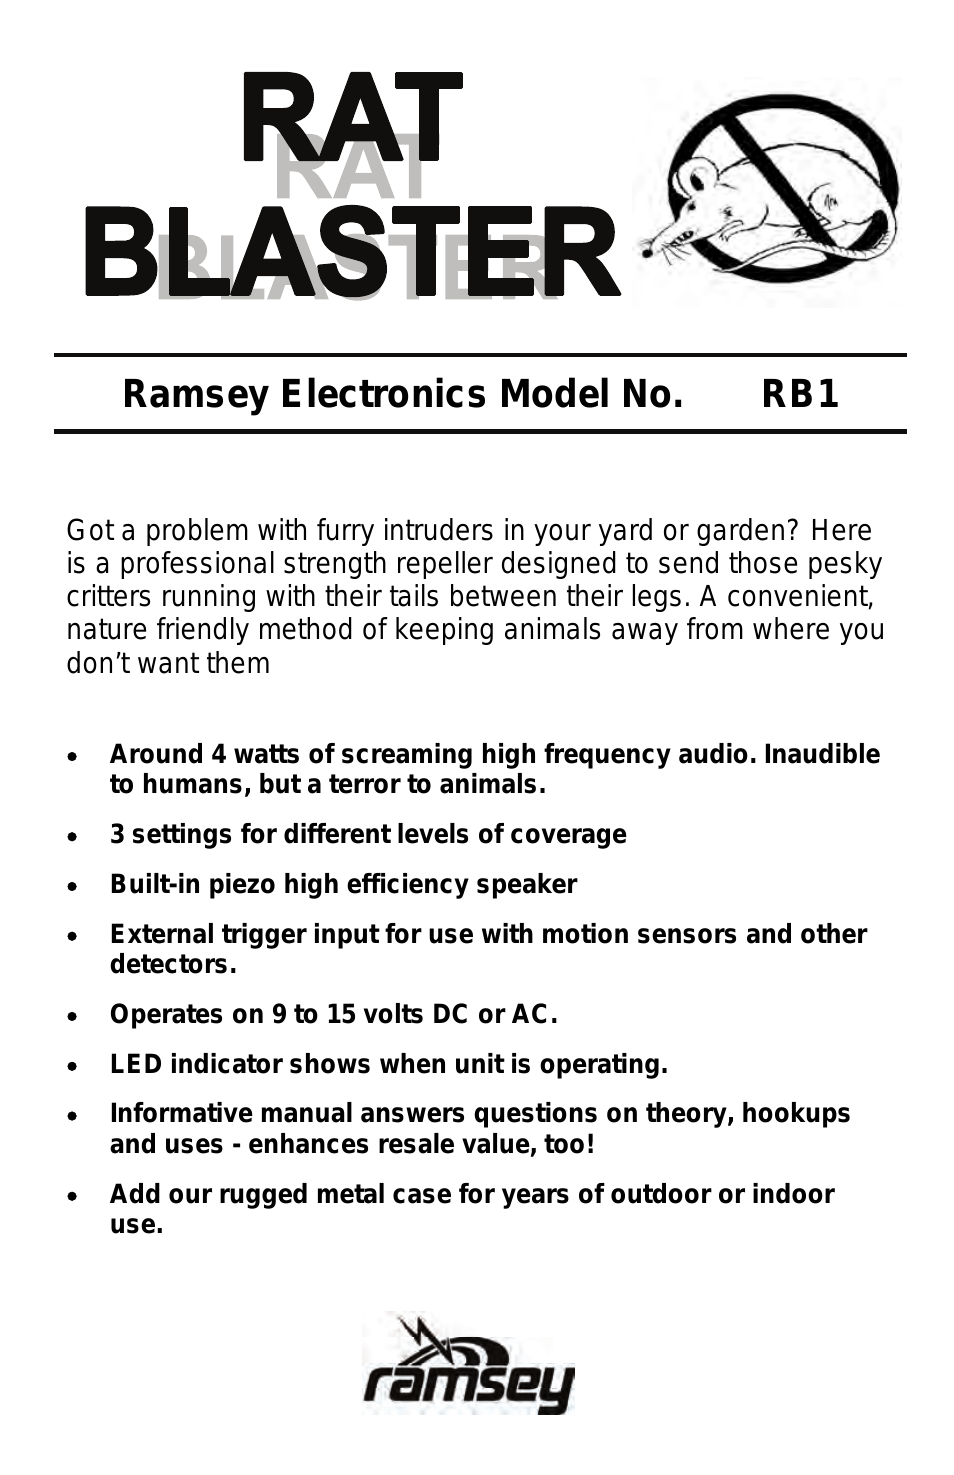 Rat Blaster RB1